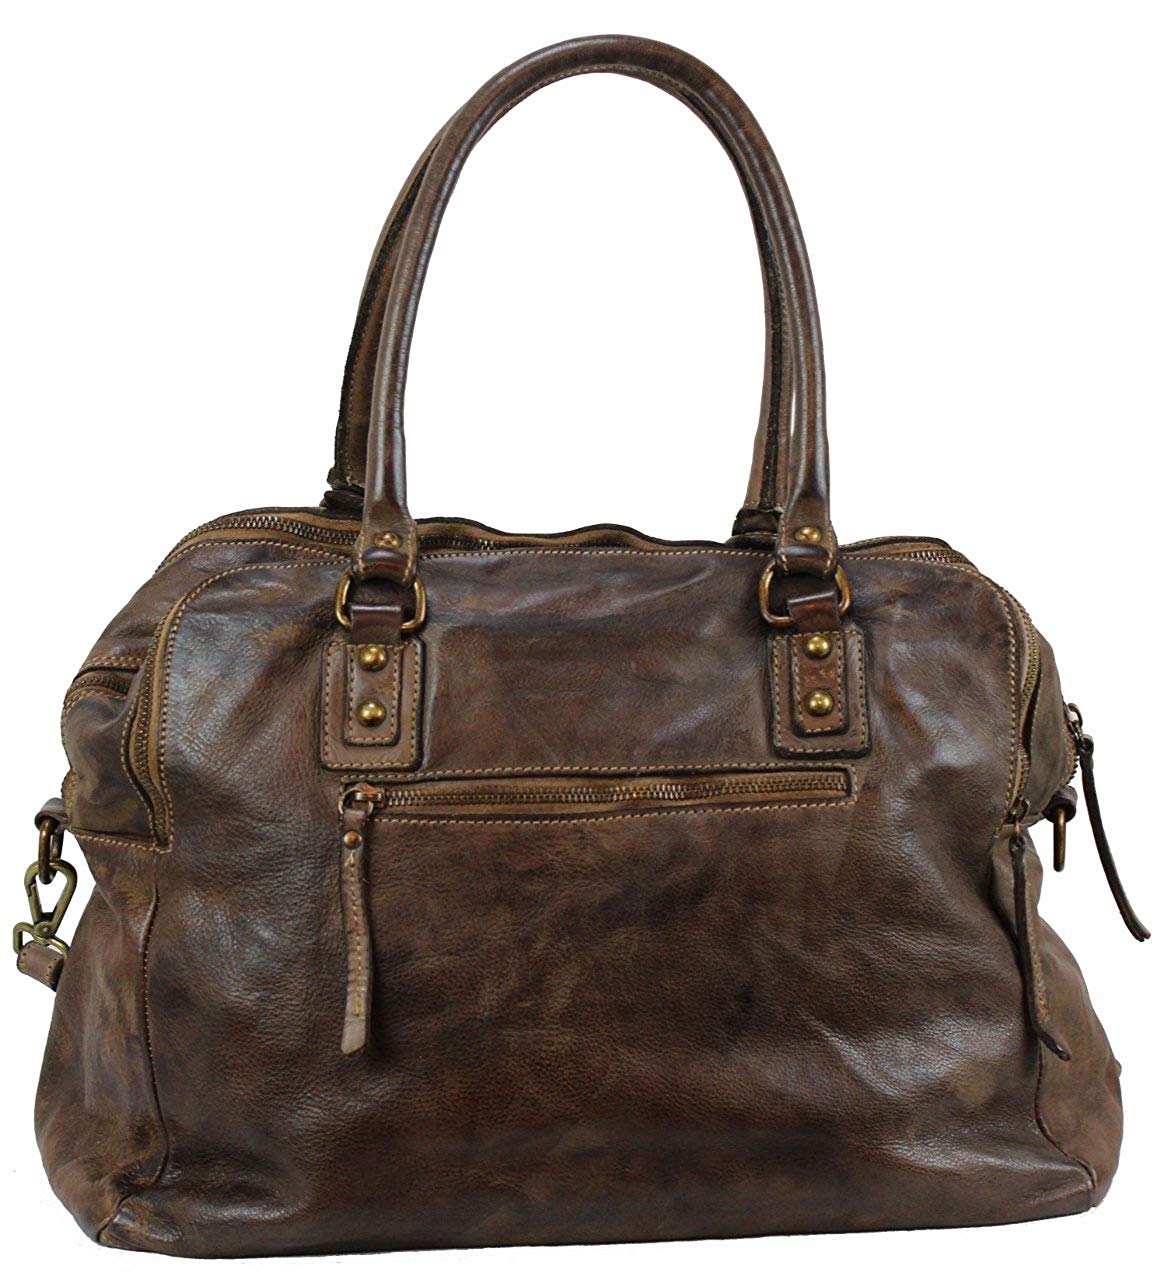 BOZANA Bag Lue moro Italy Designer Messenger Damen Handtasche Schultertasche Tasche Leder Shopper Neu